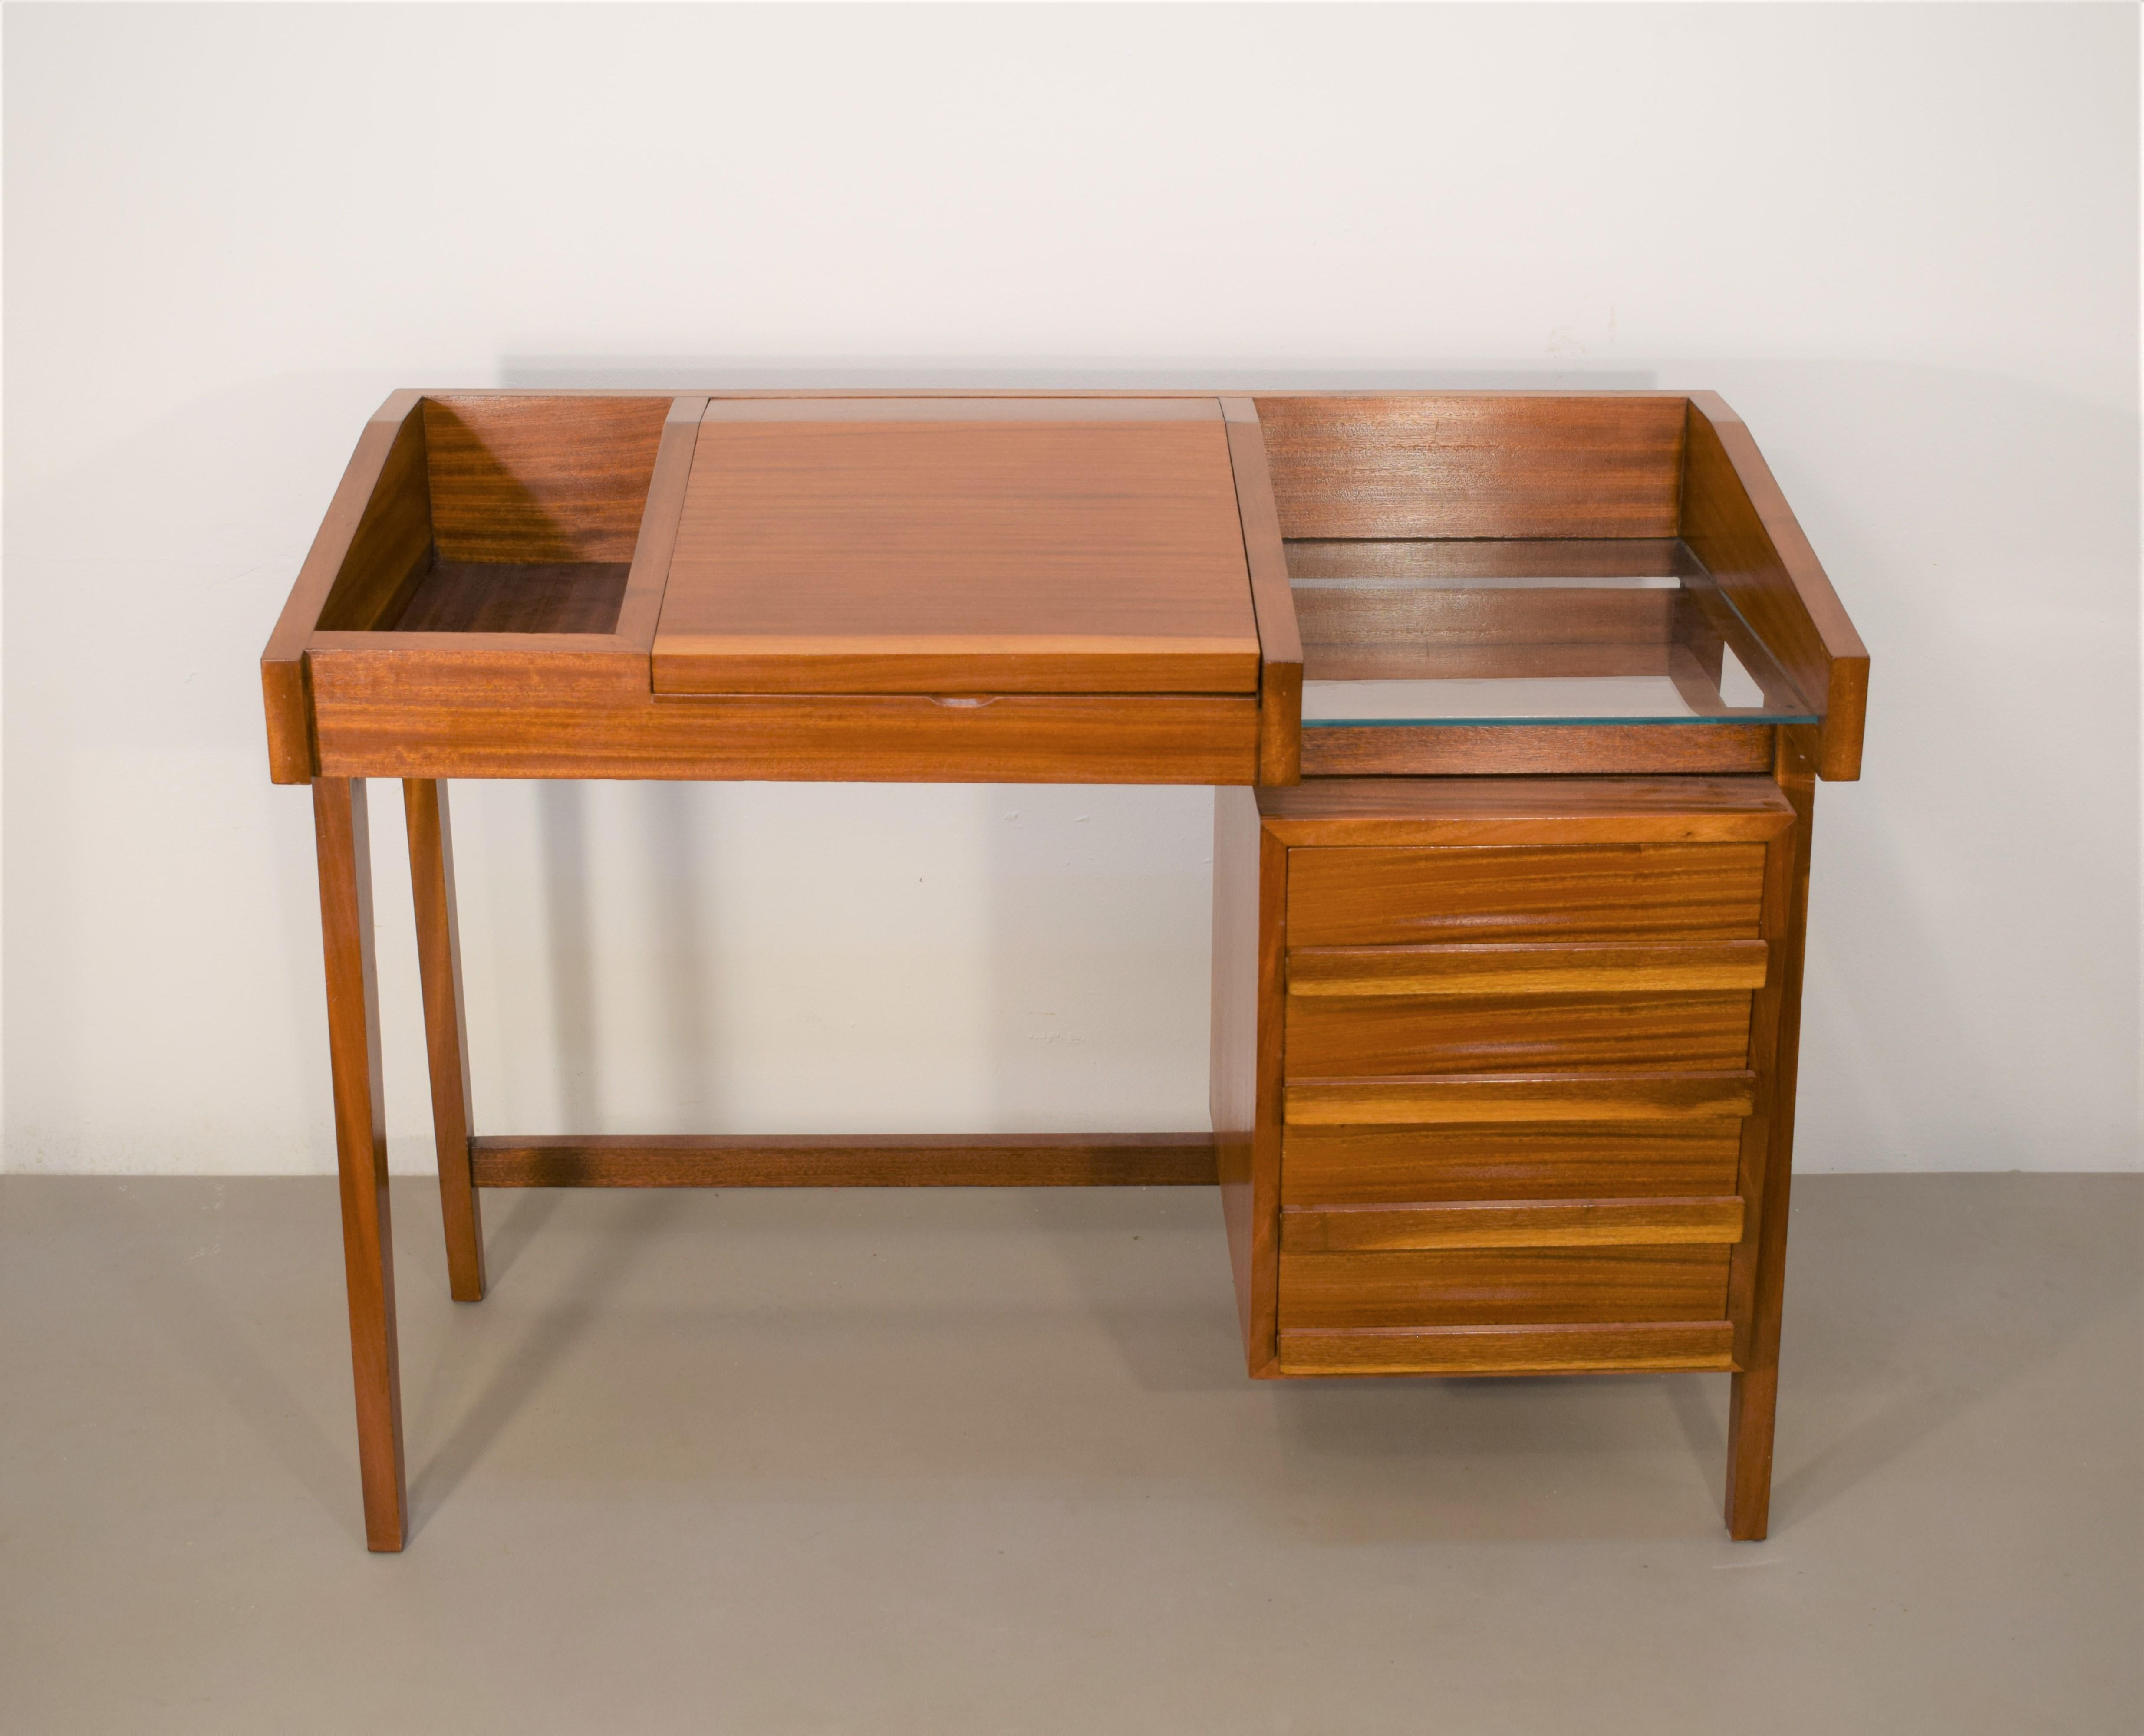 Italian mahogany desk, 1960s.

Dimensions: H= 78 cm; W= 105 cm; D= 51 cm.